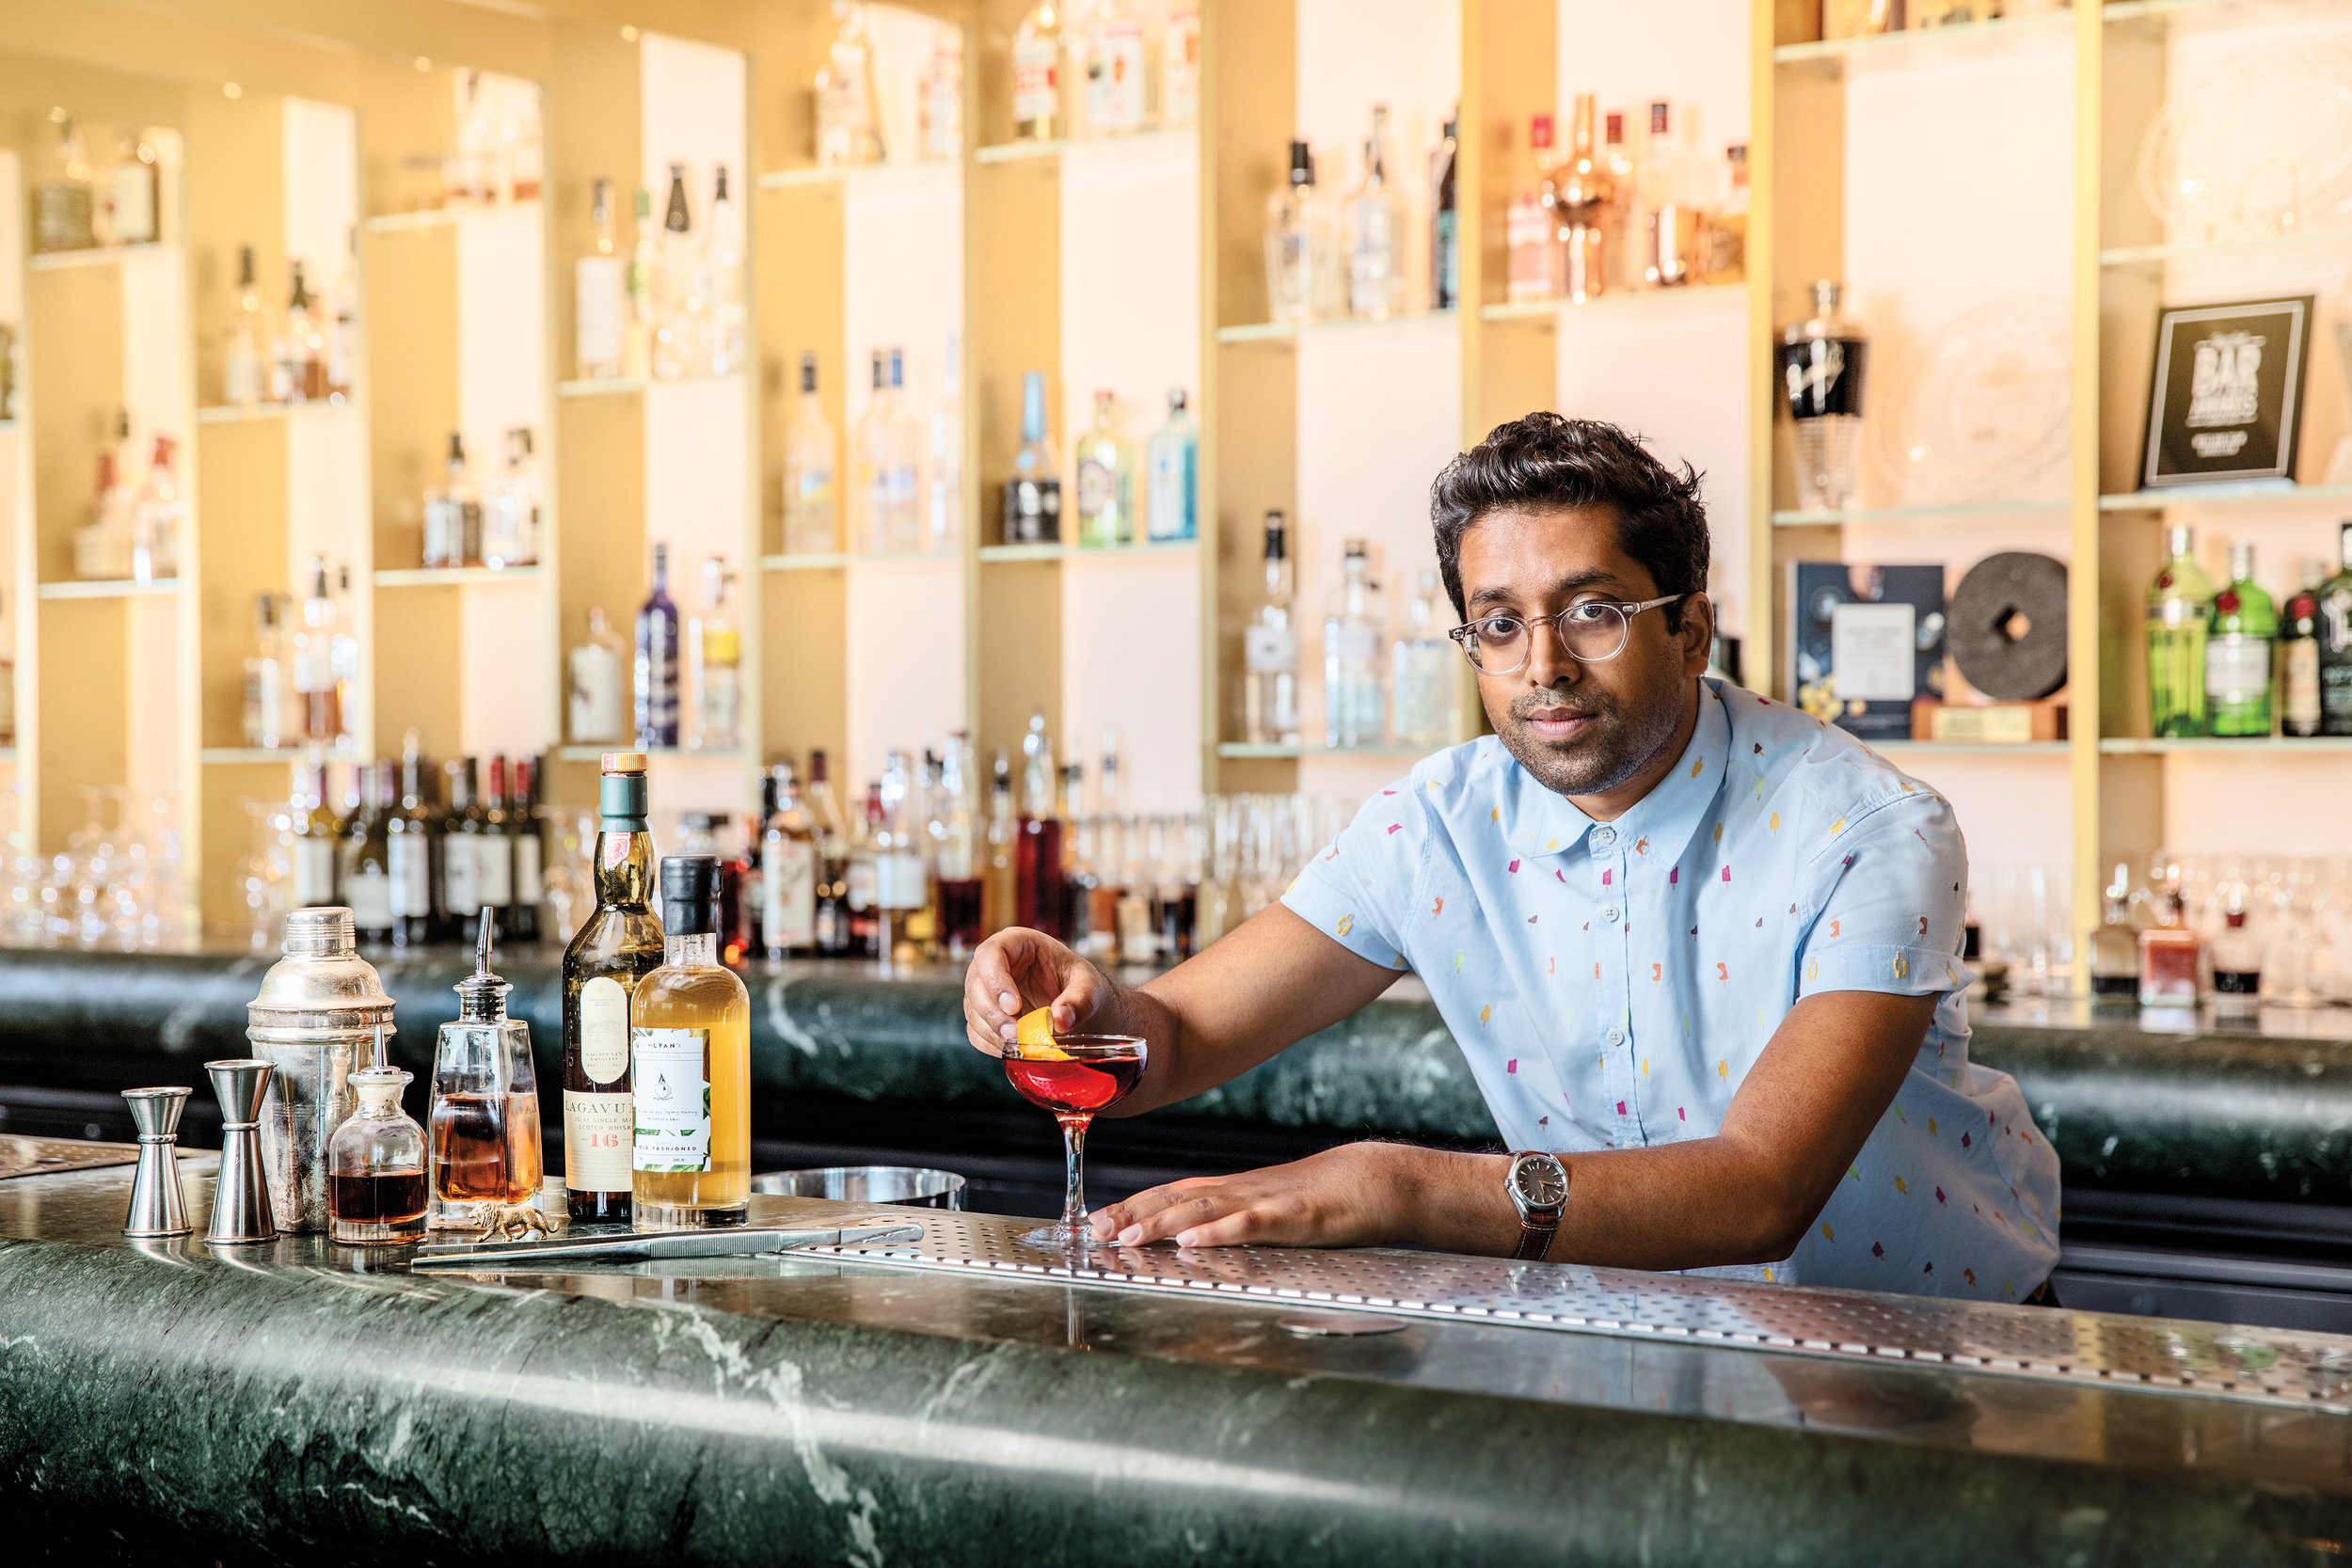  Award winning bartender and mixologist Ryan Chetiyawardana at Dandelyan Bar (now named Lyaness). London UK.  Whisky Advocate  Winter 2016. Photography by Julian Love.  